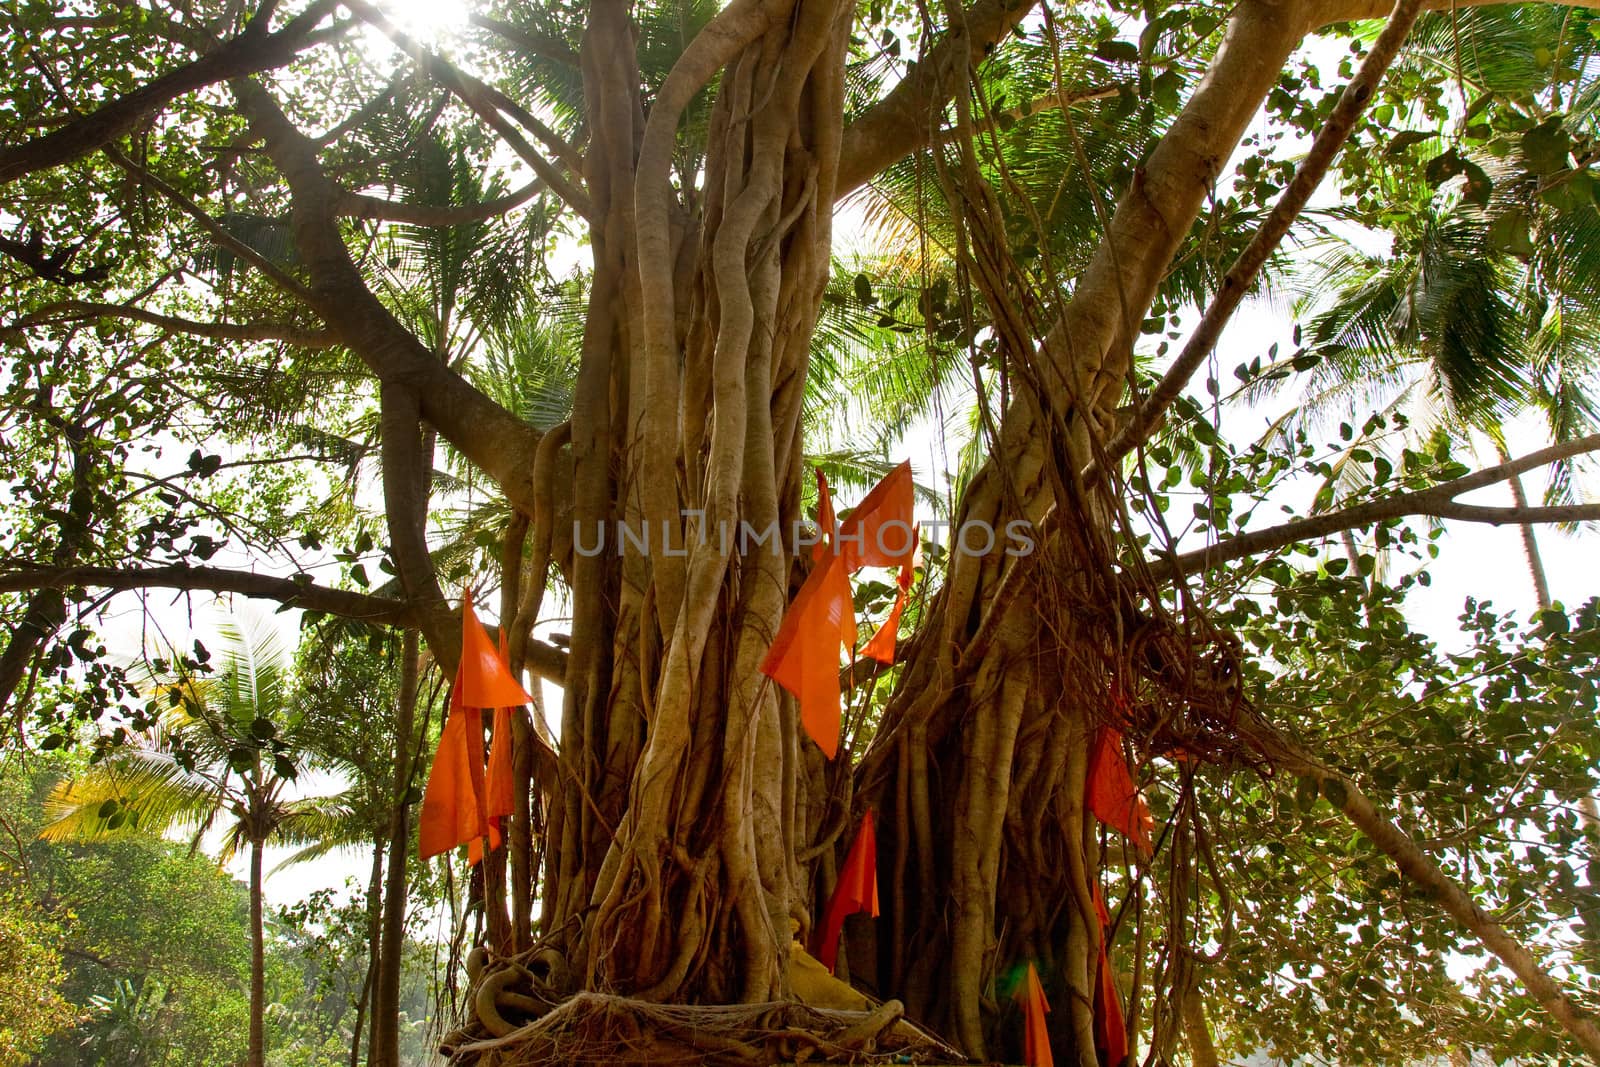 Big banyan tree with flags in India, Goa